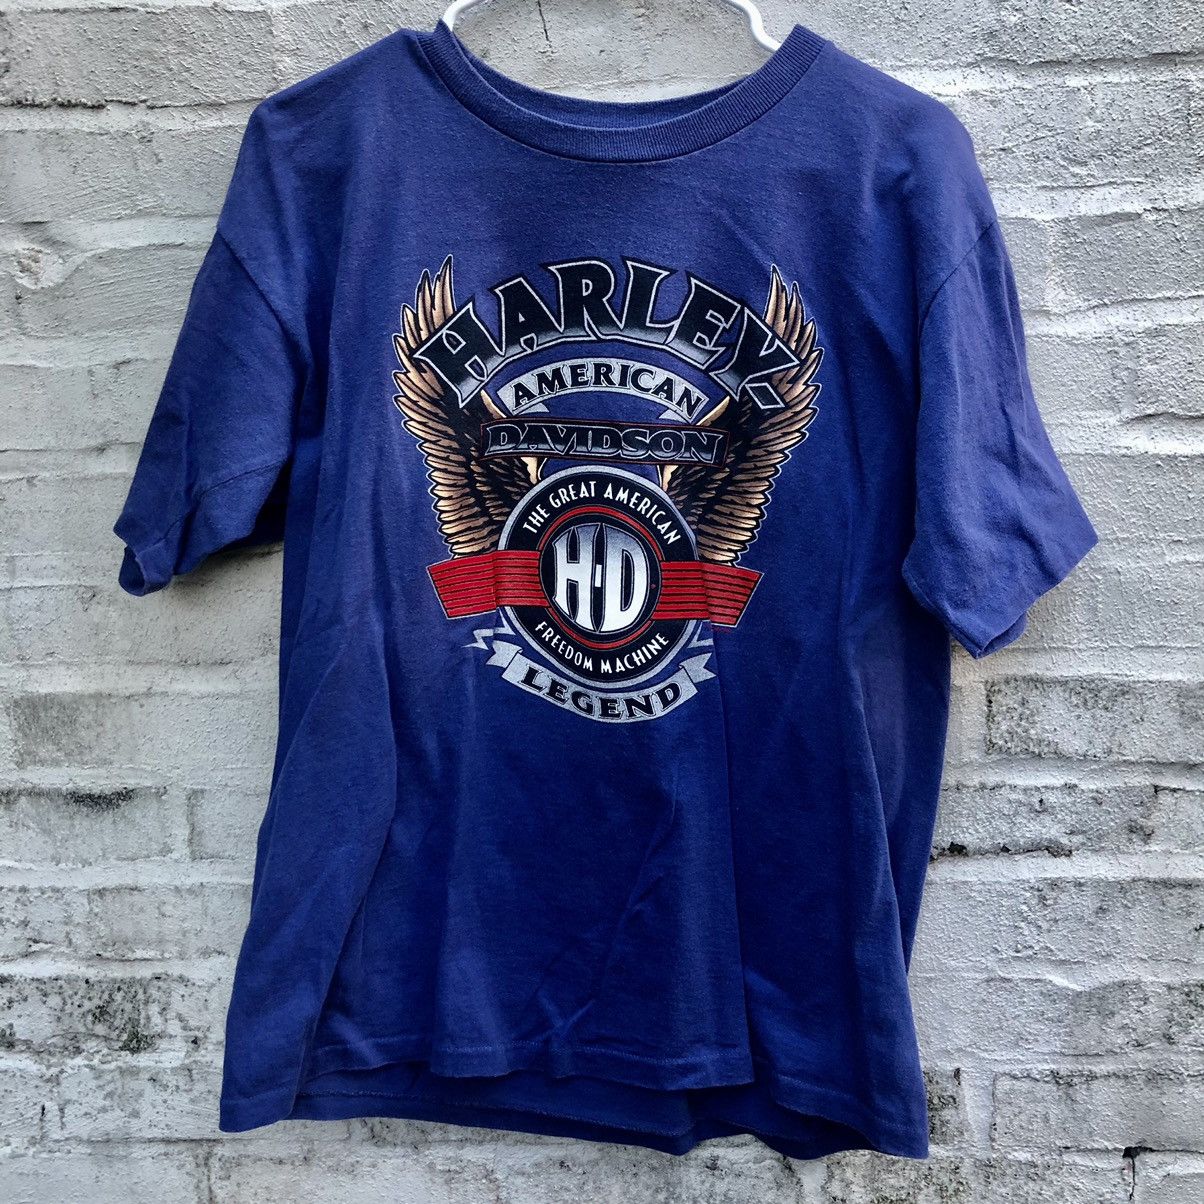 Harley Davidson vintage 1994 HARLEY American Freedom Machine tee shirt M Size US M / EU 48-50 / 2 - 2 Preview